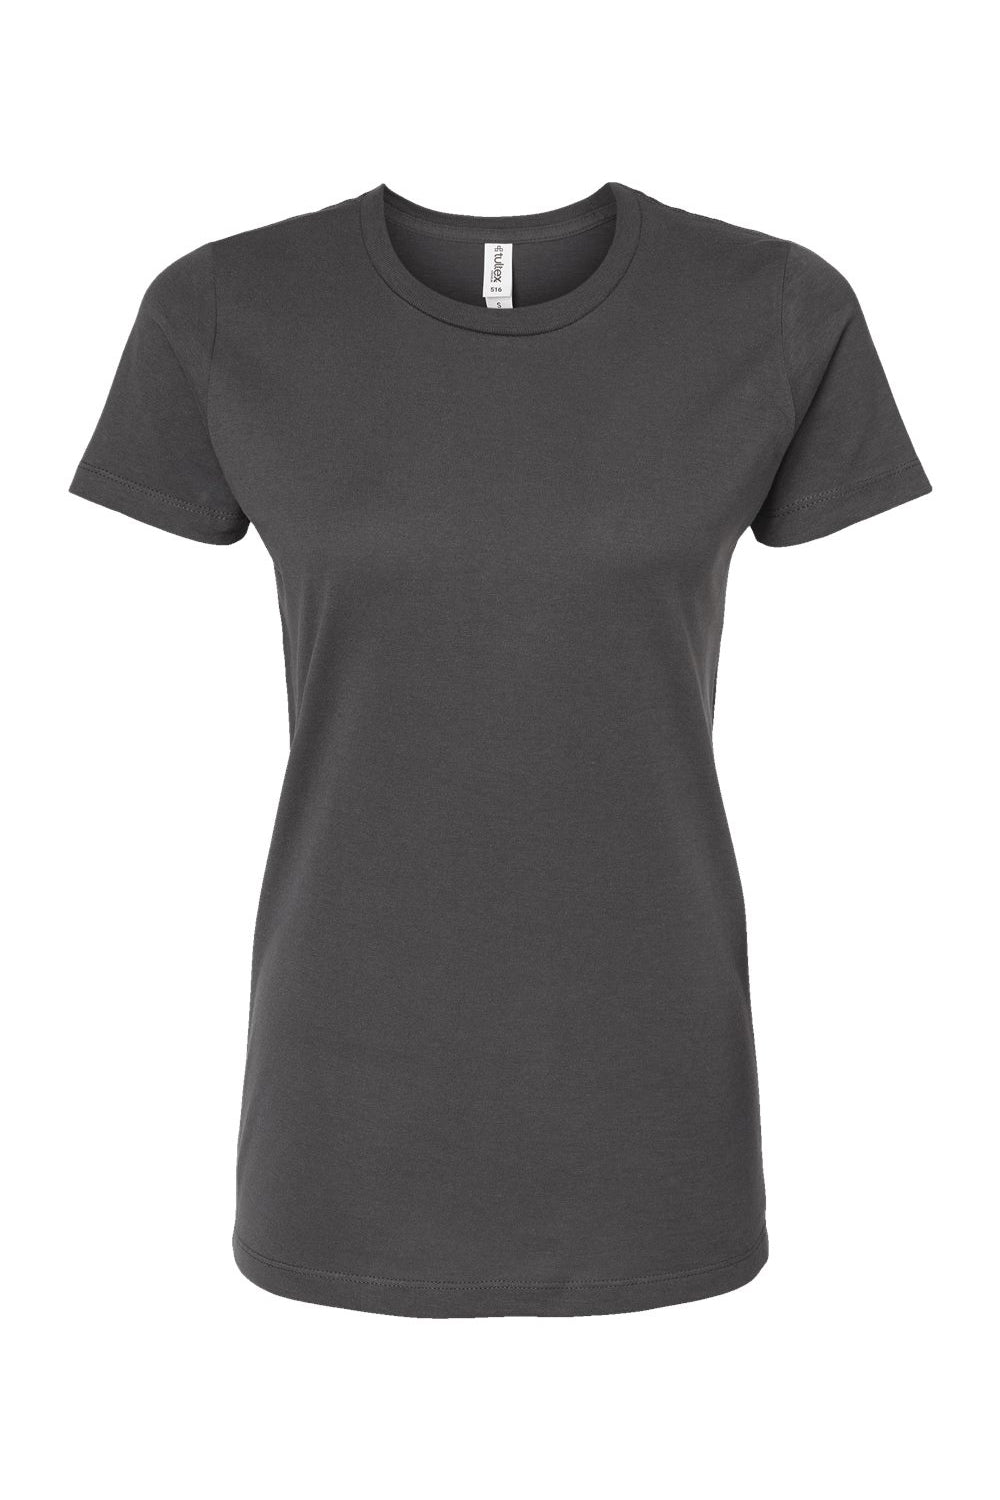 Tultex 516 Womens Premium Short Sleeve Crewneck T-Shirt Charcoal Grey Flat Front